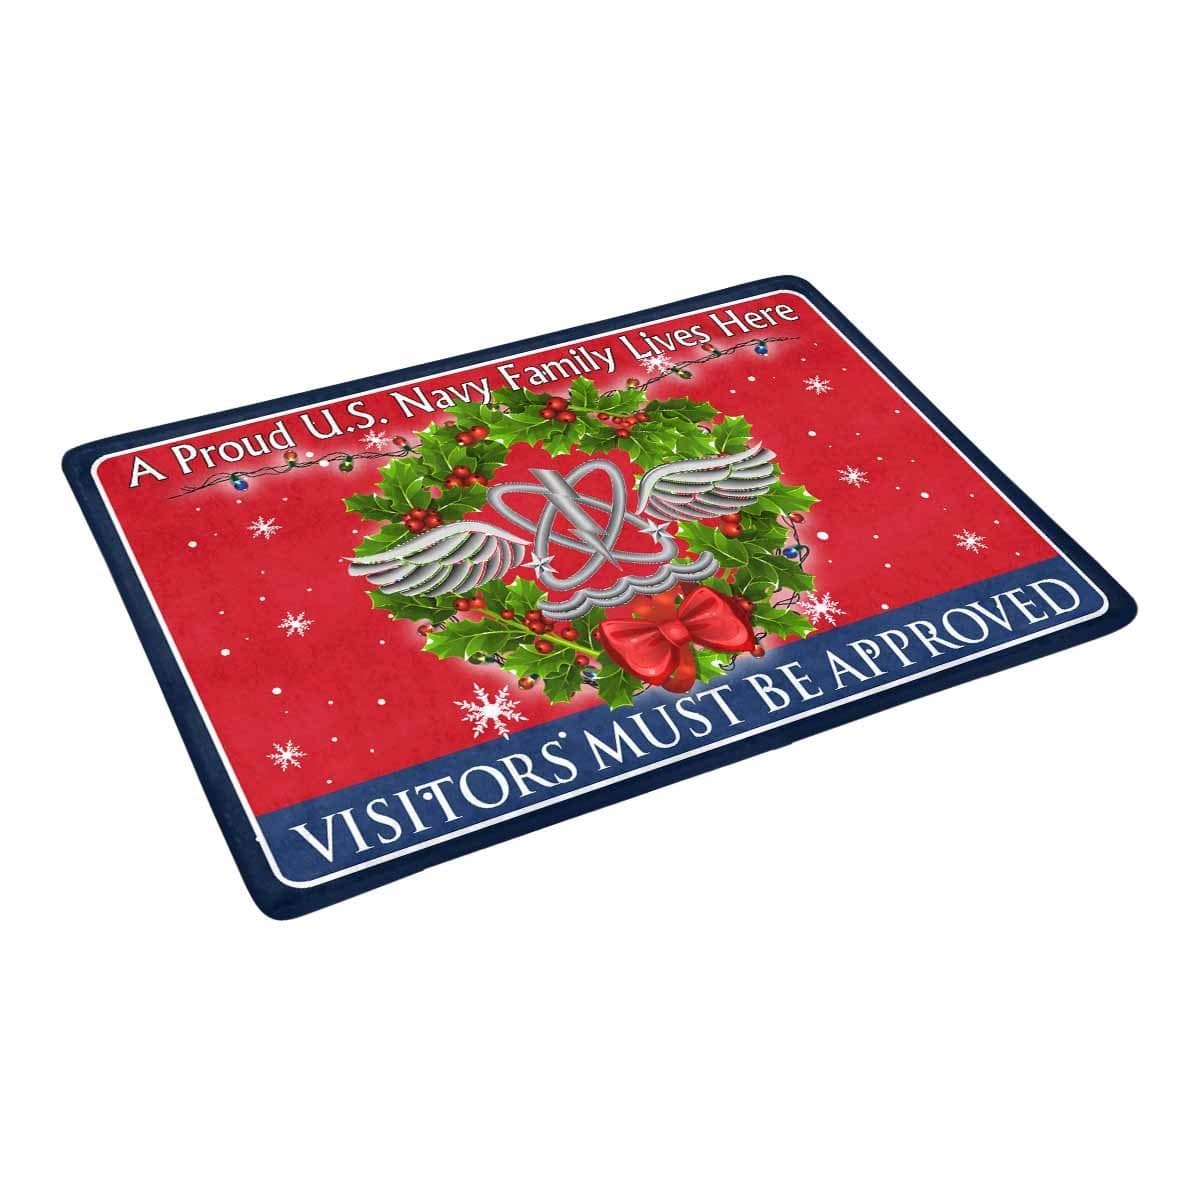 U.S Navy Naval aircrewman Navy AW - Visitors must be approved - Christmas Doormat-Doormat-Navy-Rate-Veterans Nation